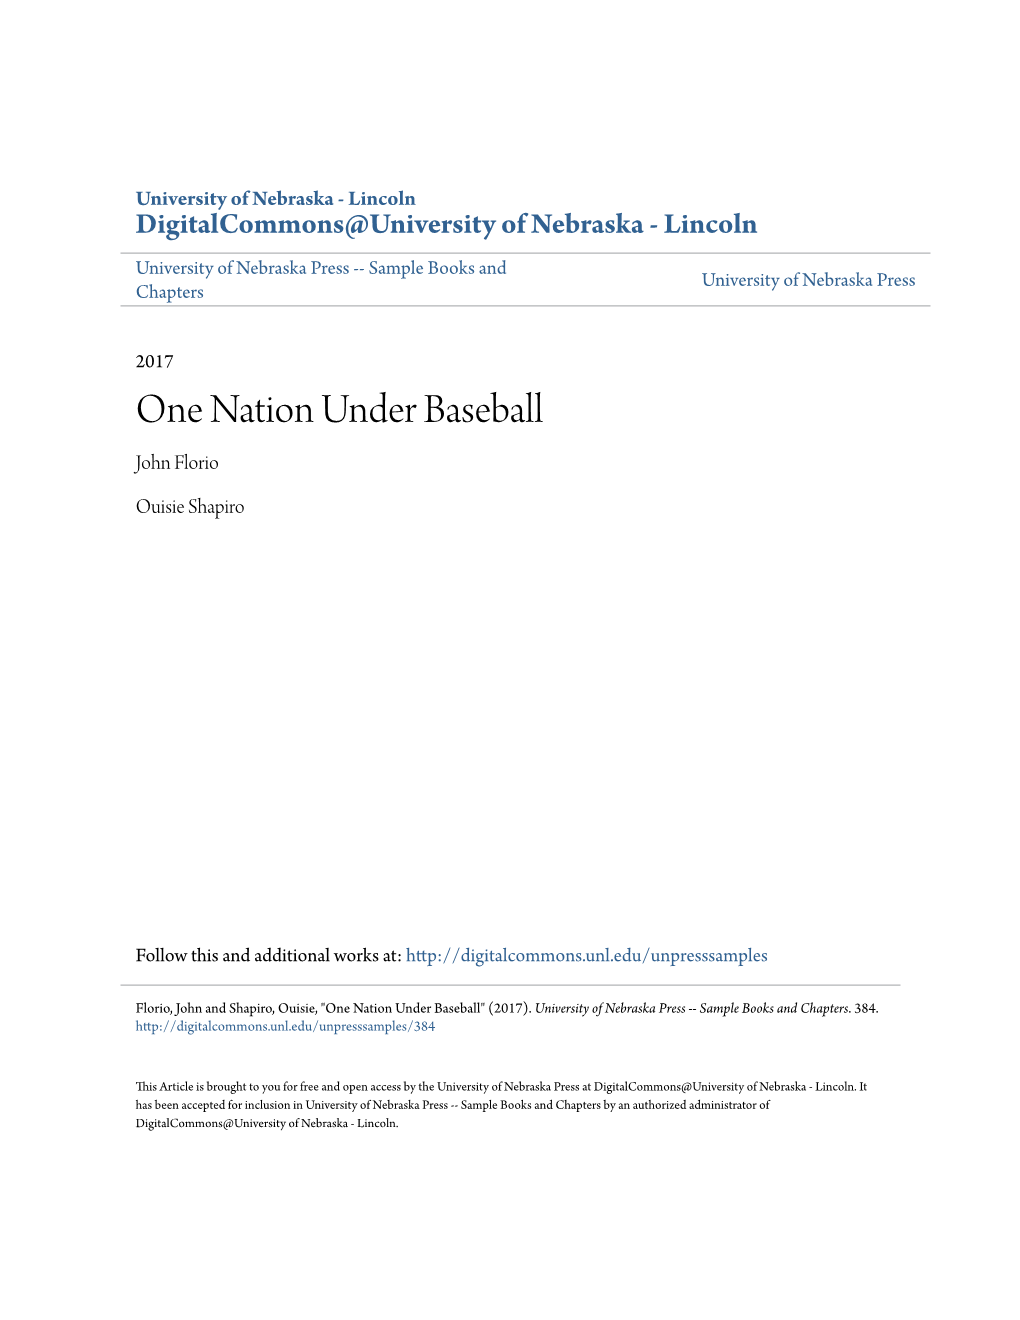 One Nation Under Baseball John Florio